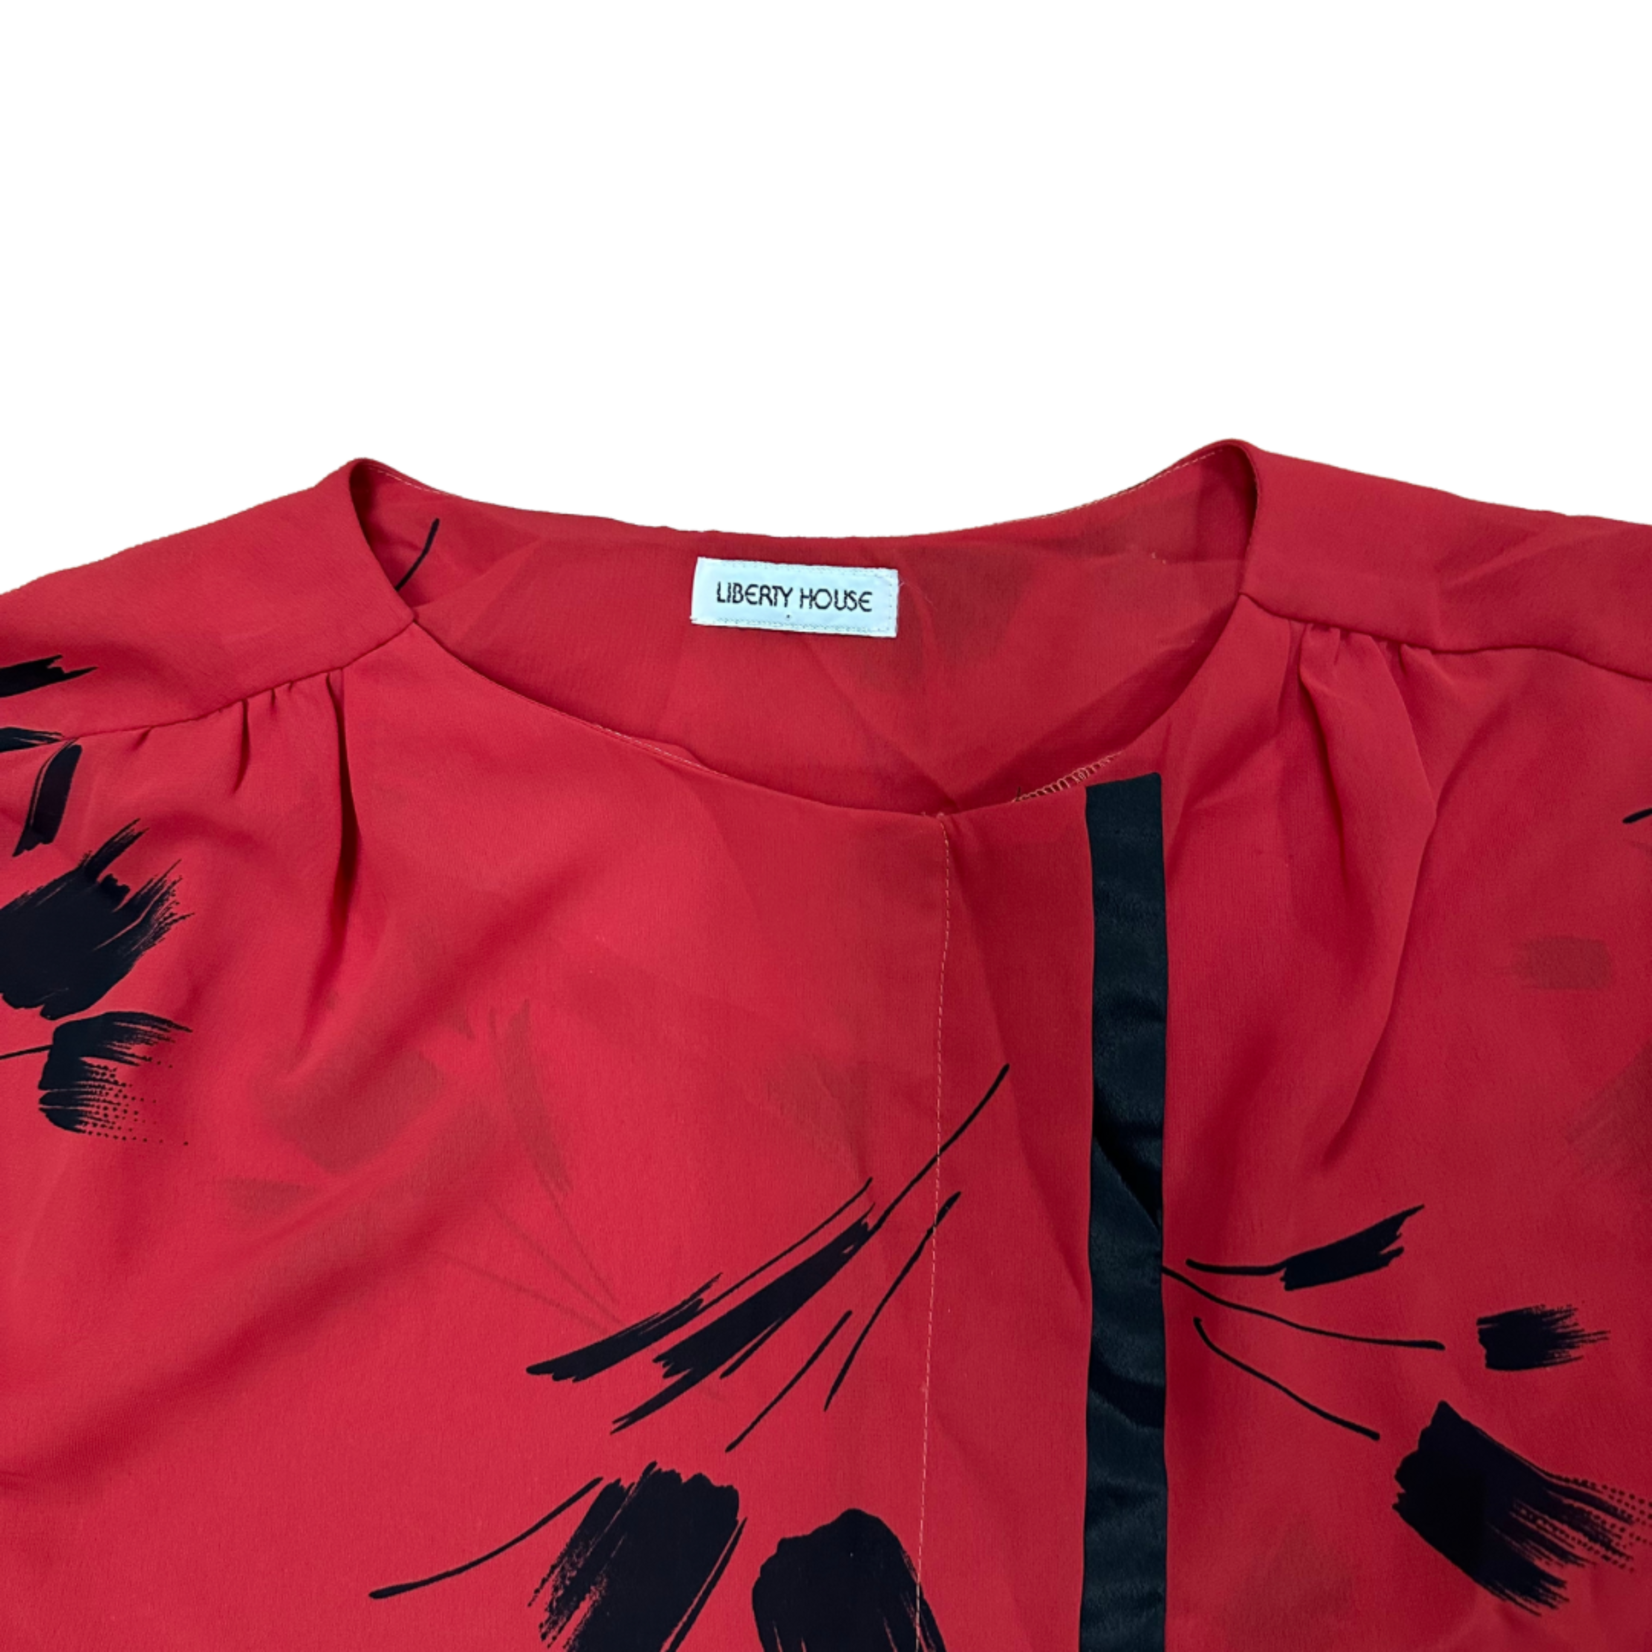 Mission Zero Women’s Vintage Shirt - S- Red + Black Sheer Blouse